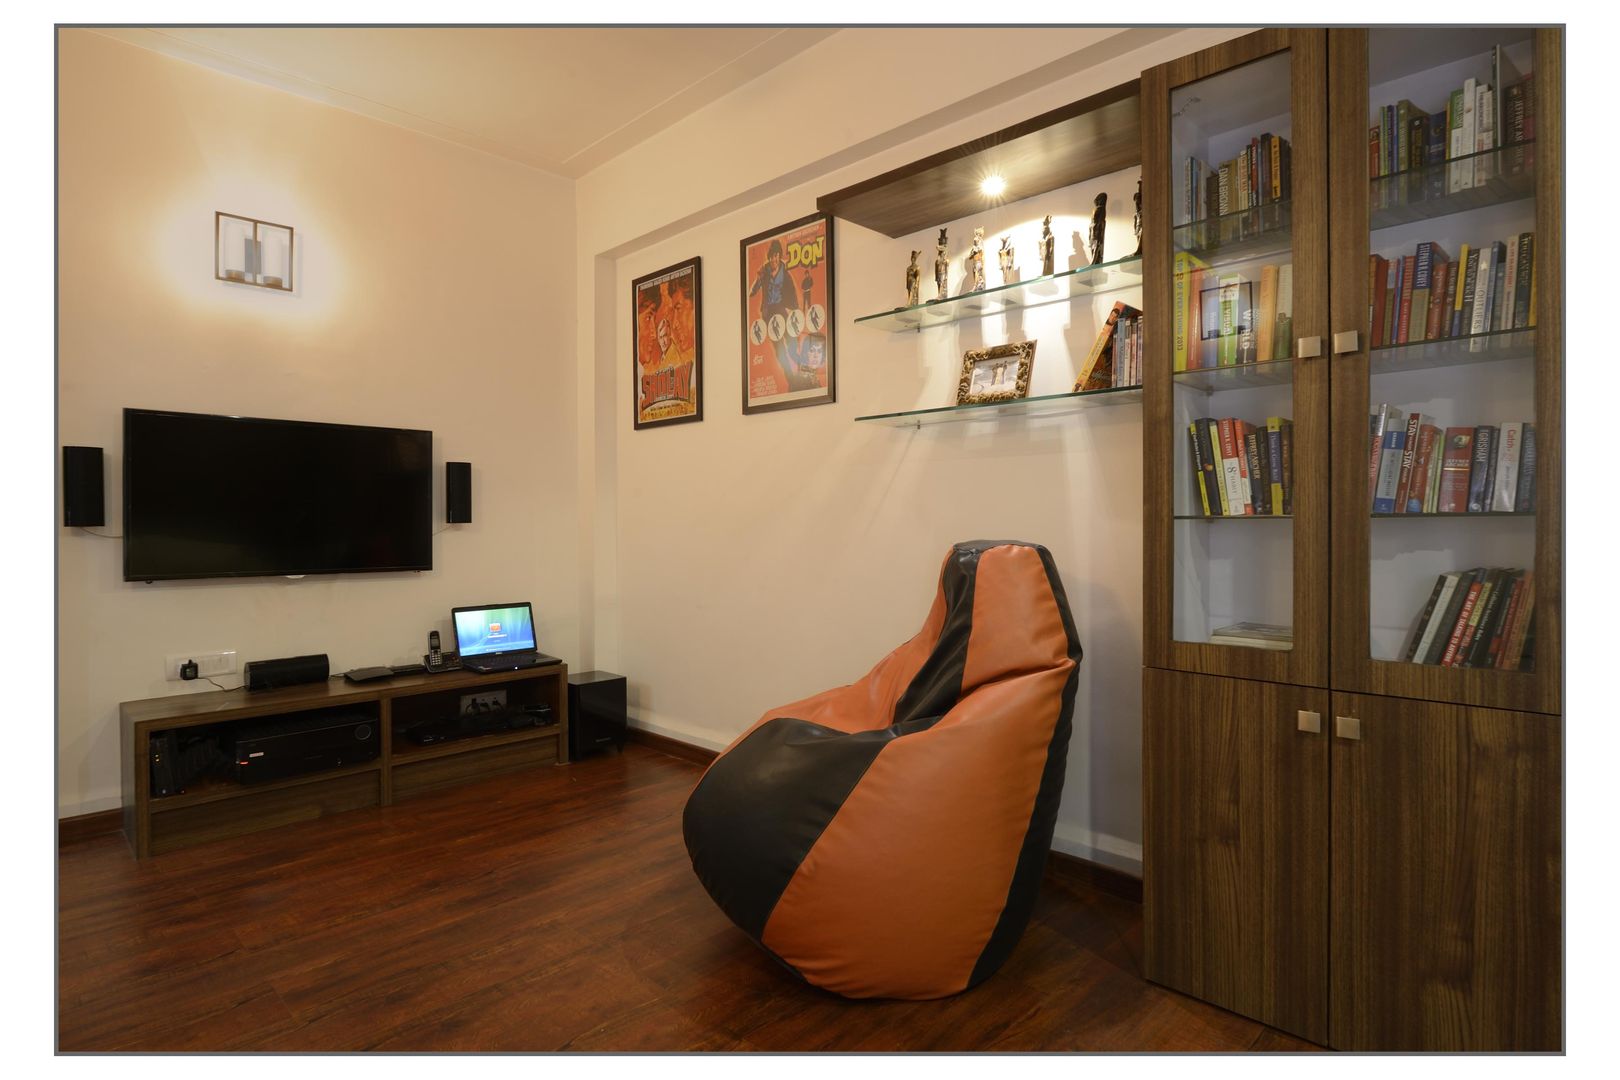 Residential Apartment on Bund Garden Road, Pune, Navmiti Designs Navmiti Designs Daha fazla oda Resim & Tablolar